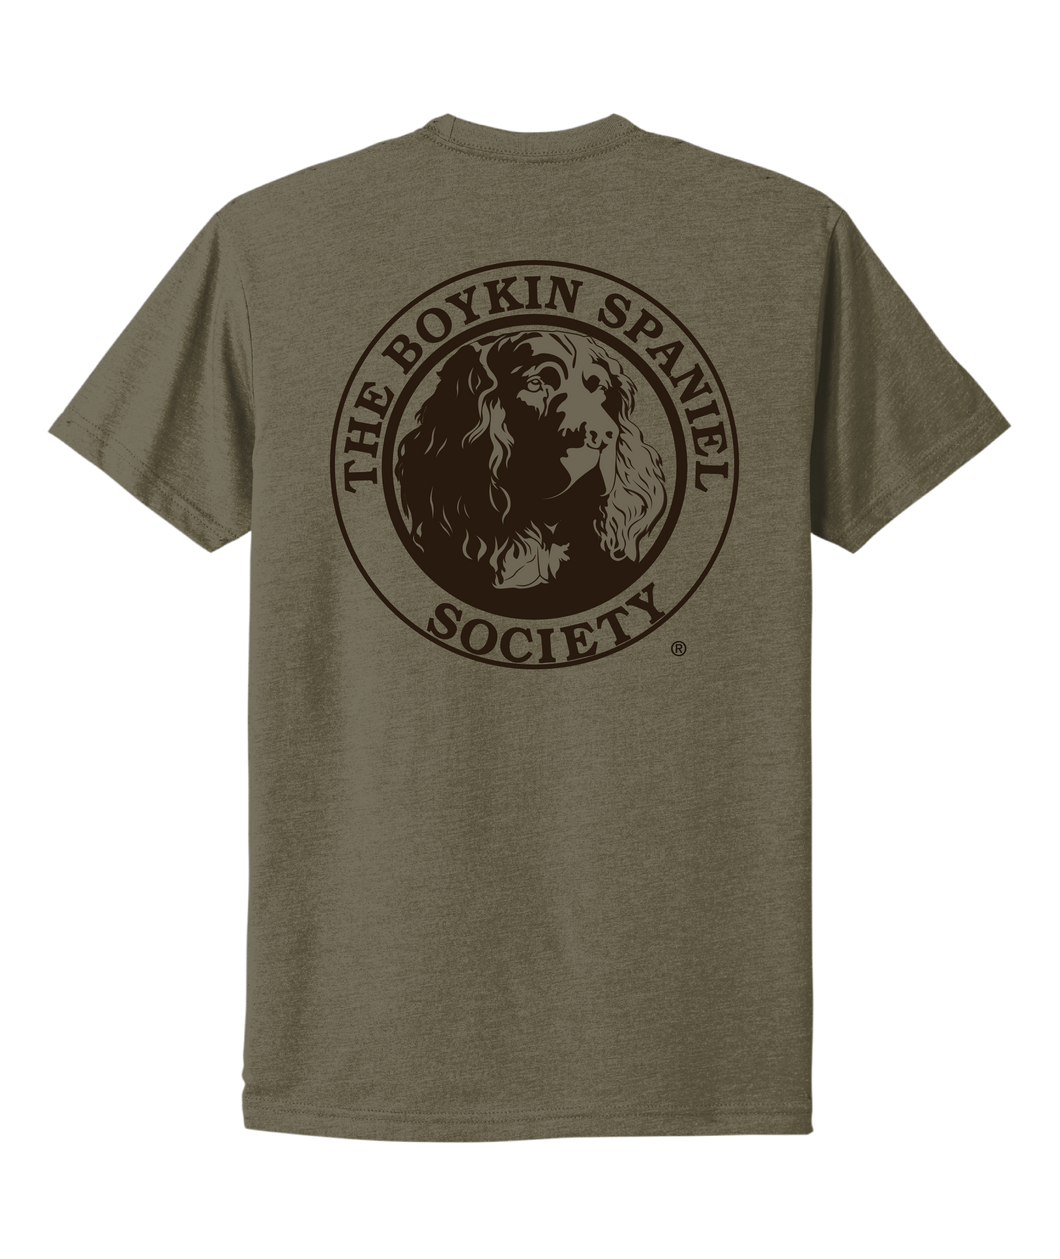 Military Green Boykin Spaniel Society official logo t-shirt